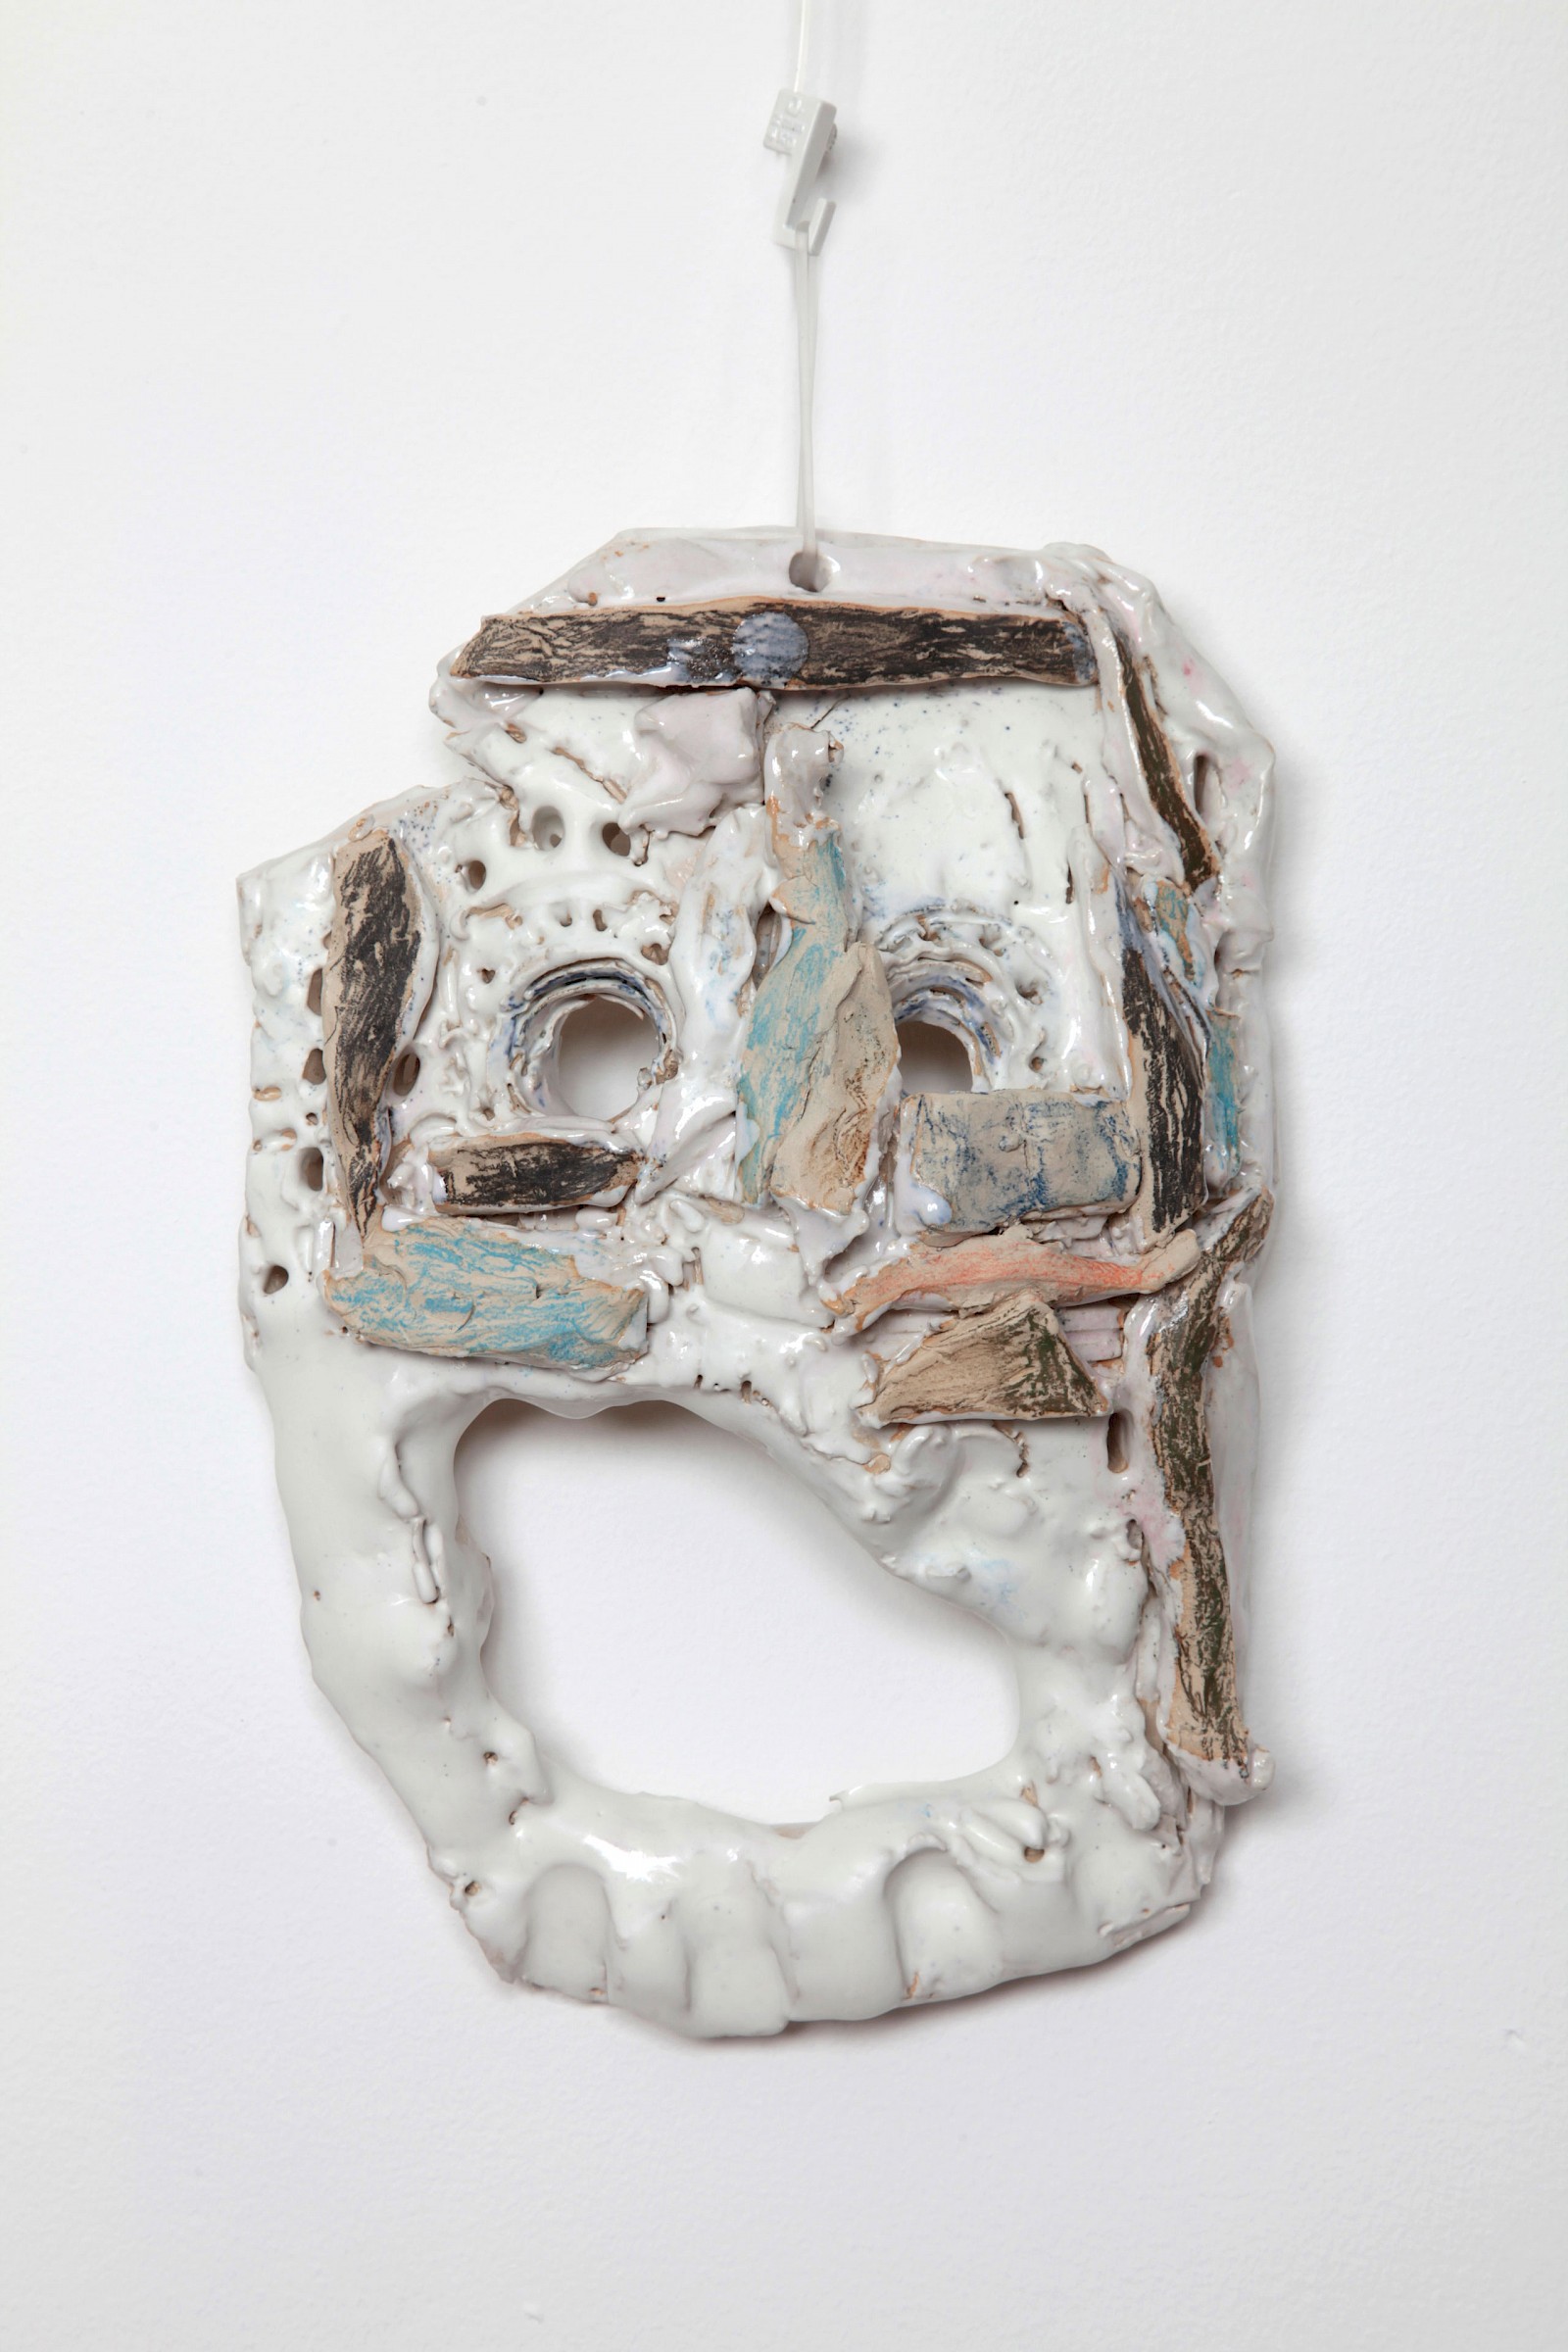 Image - Ceramic mask by Emilie Frosio